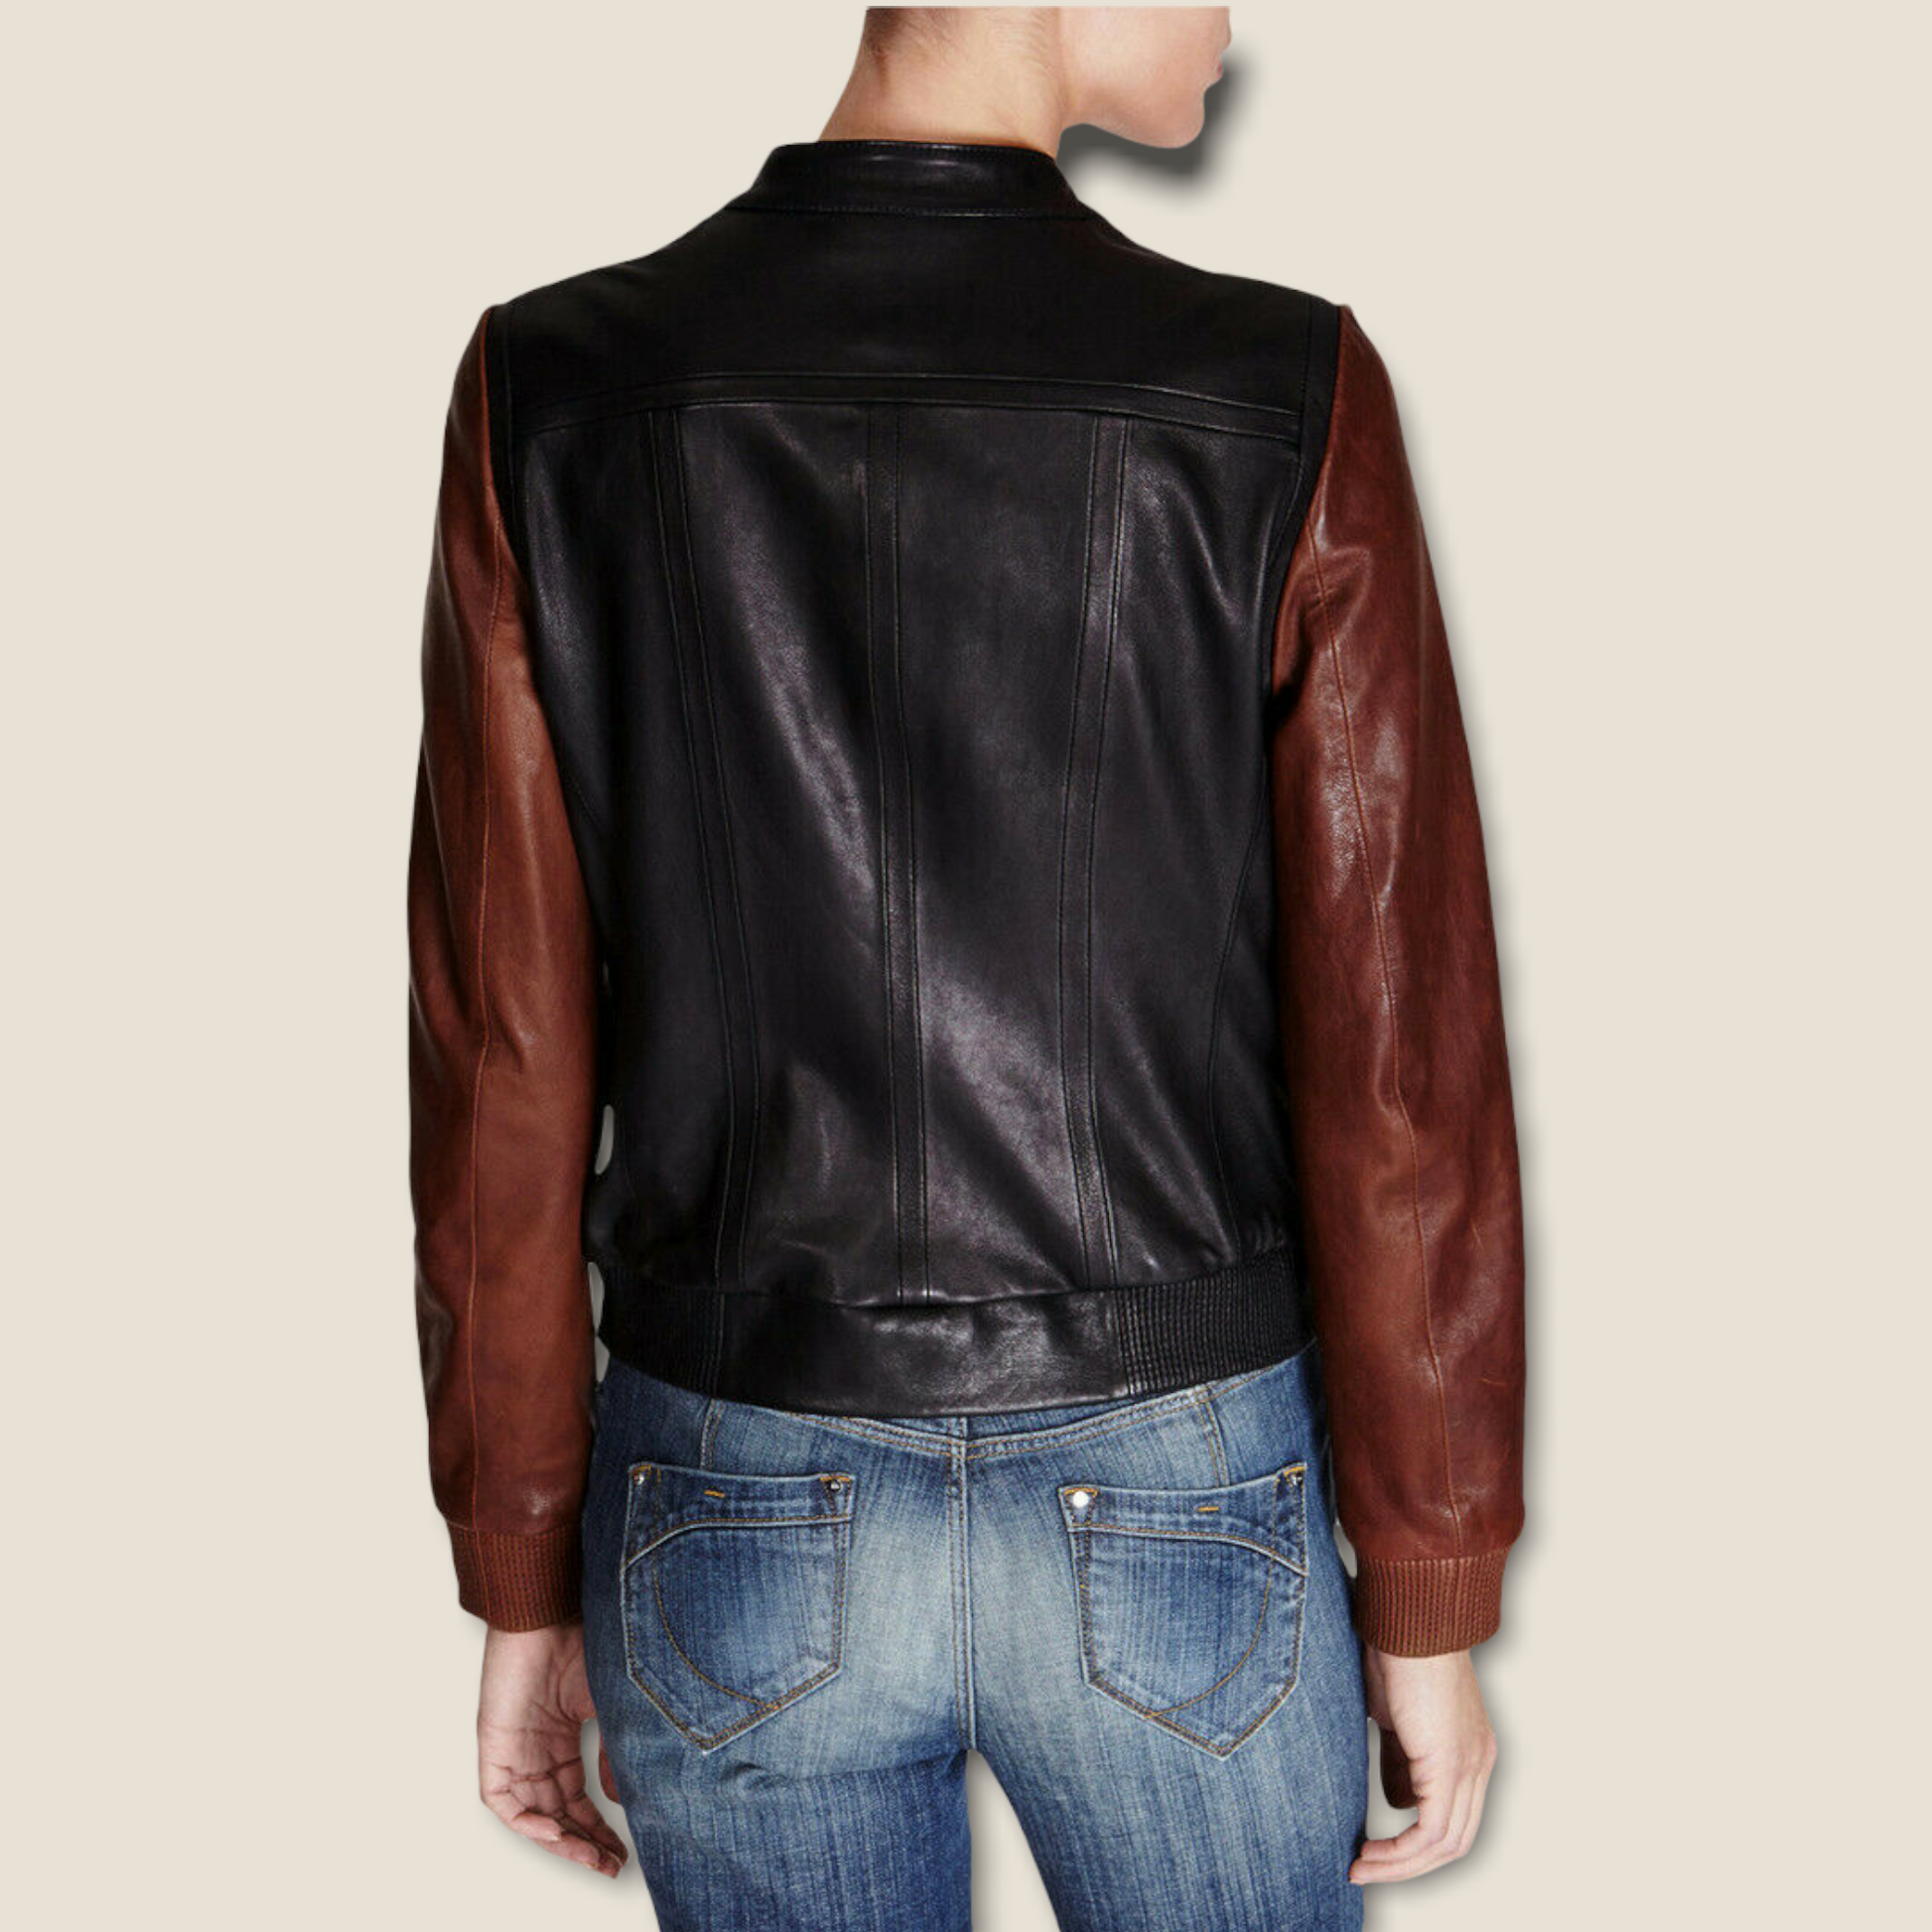 Karen Millen Black & Brown Leather Jacket UK 10 US 6 EU 36 Timeless Fashions